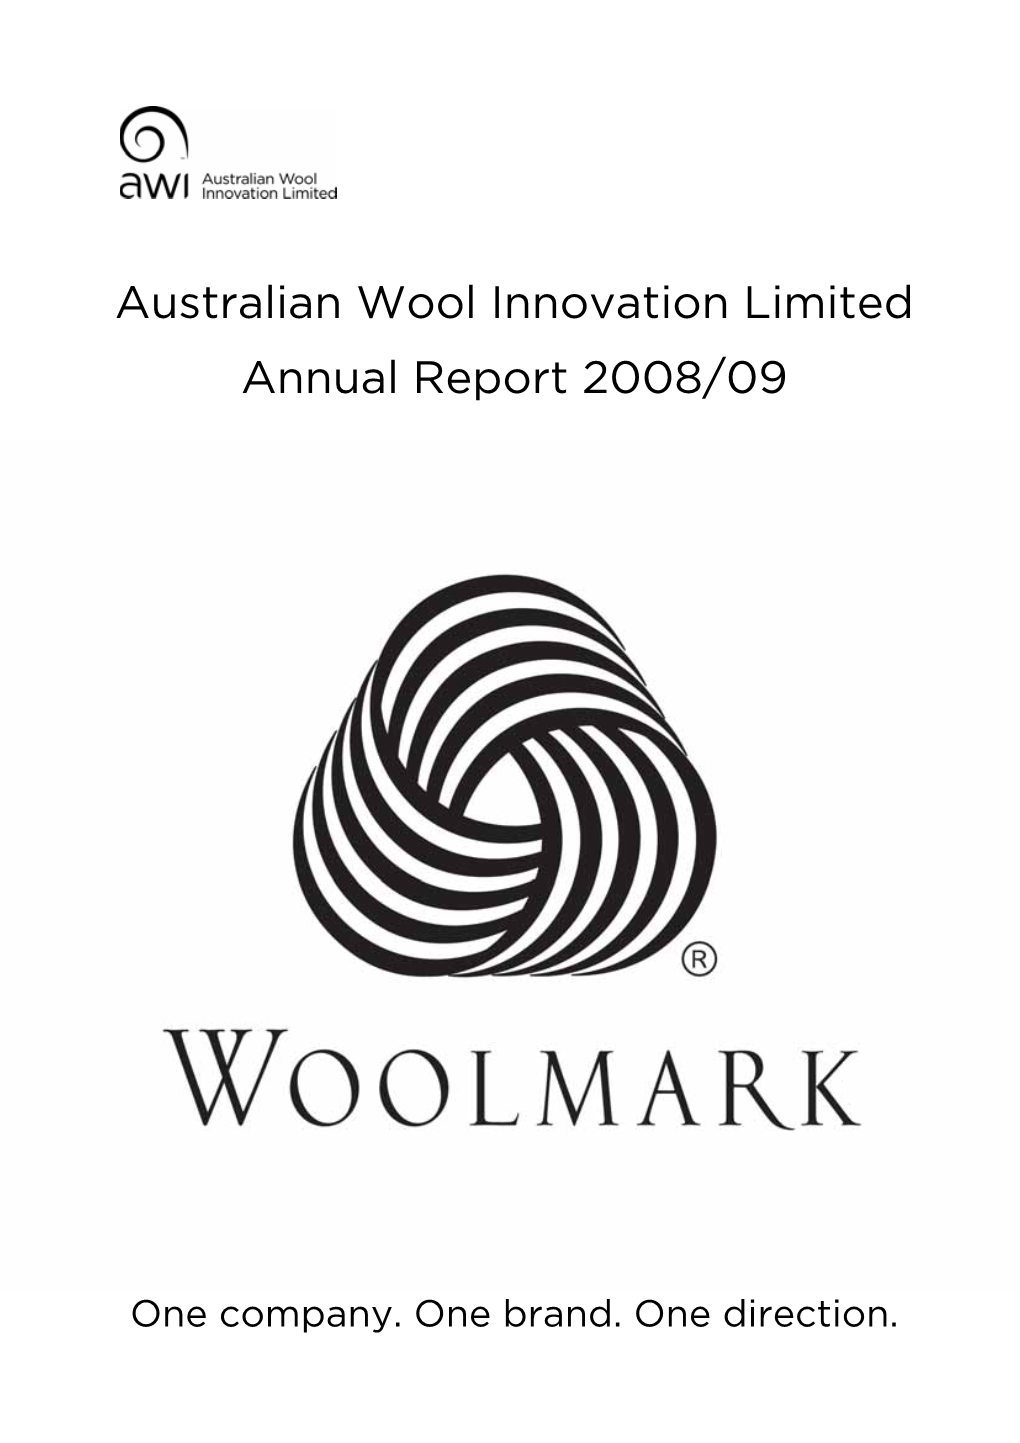 2008/09 Annual Report